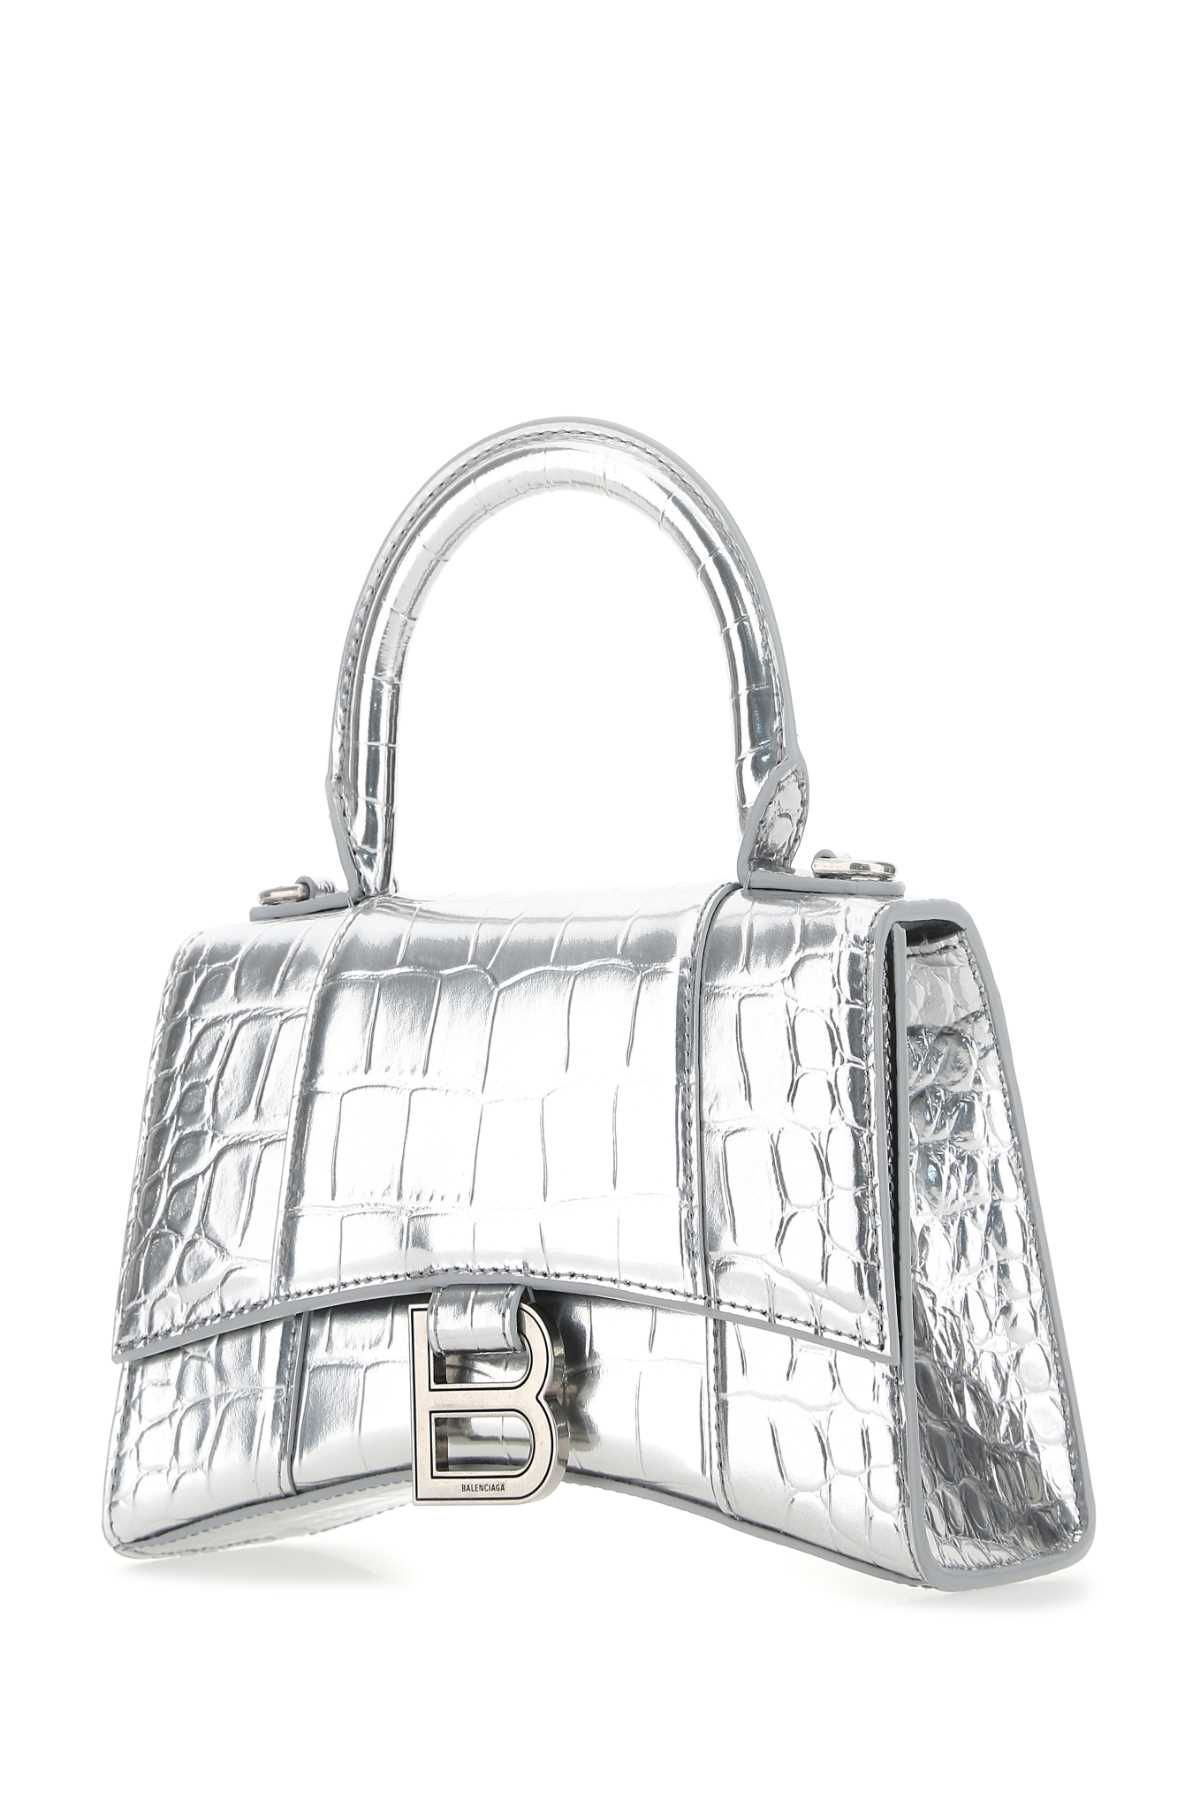 Balenciaga Silver Leather Xs Hourglass Handbag In 8110